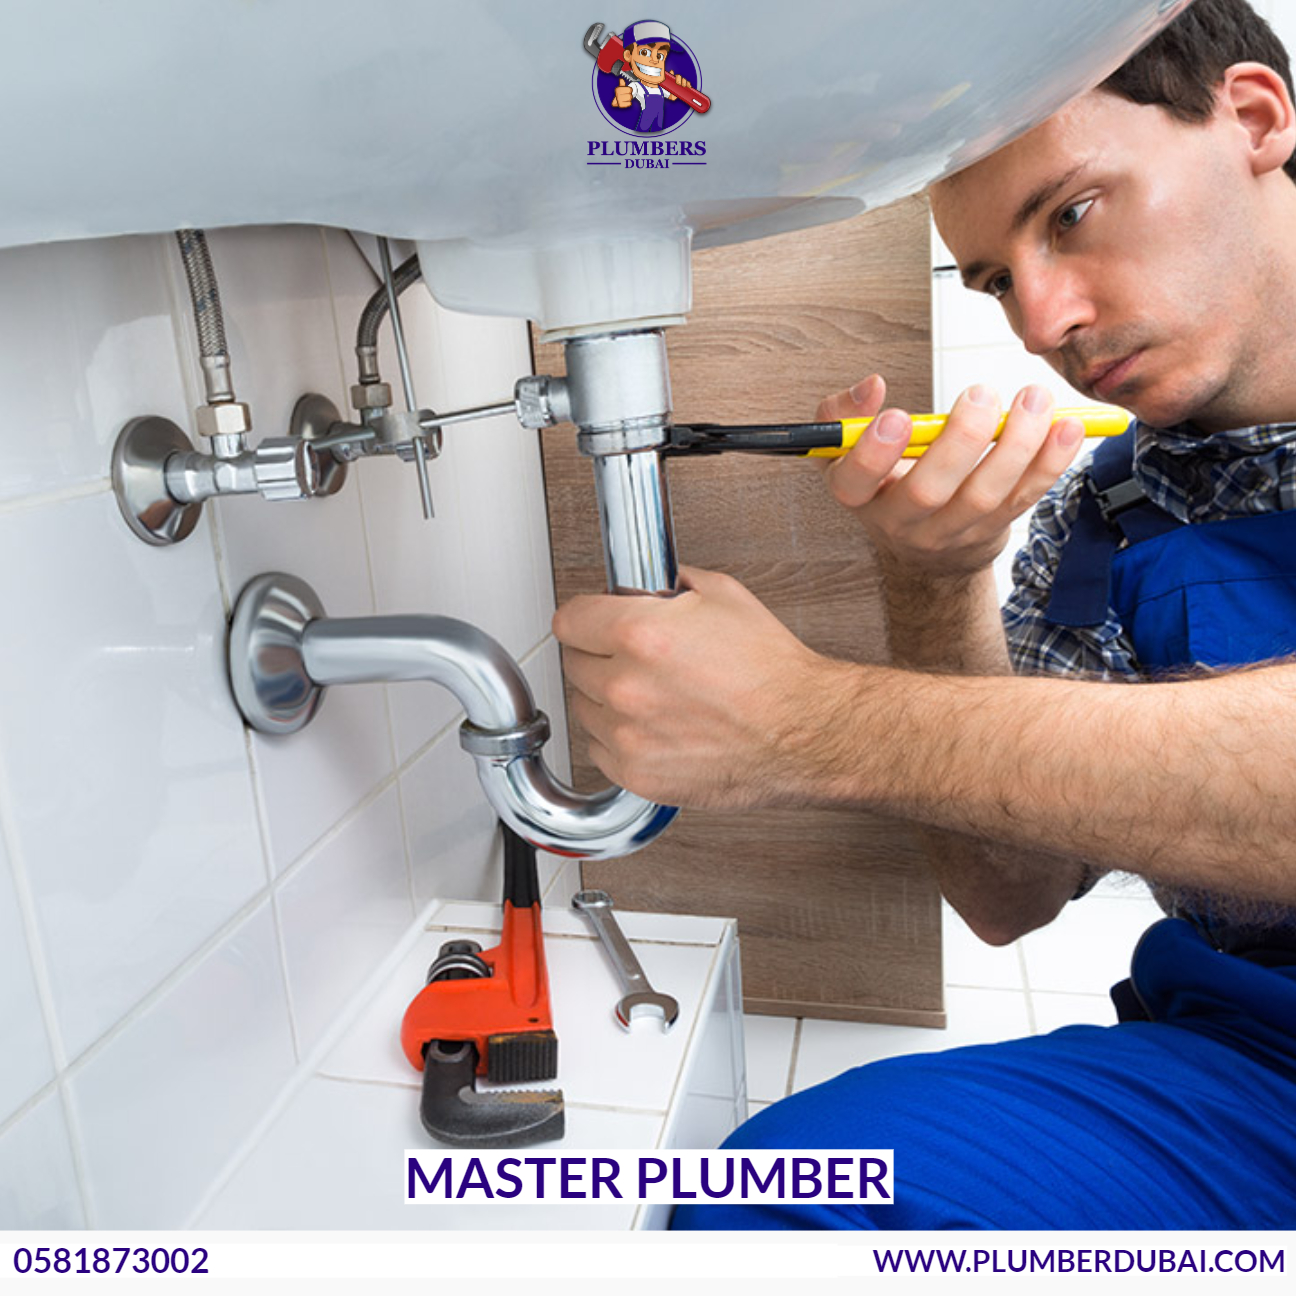 Master plumber